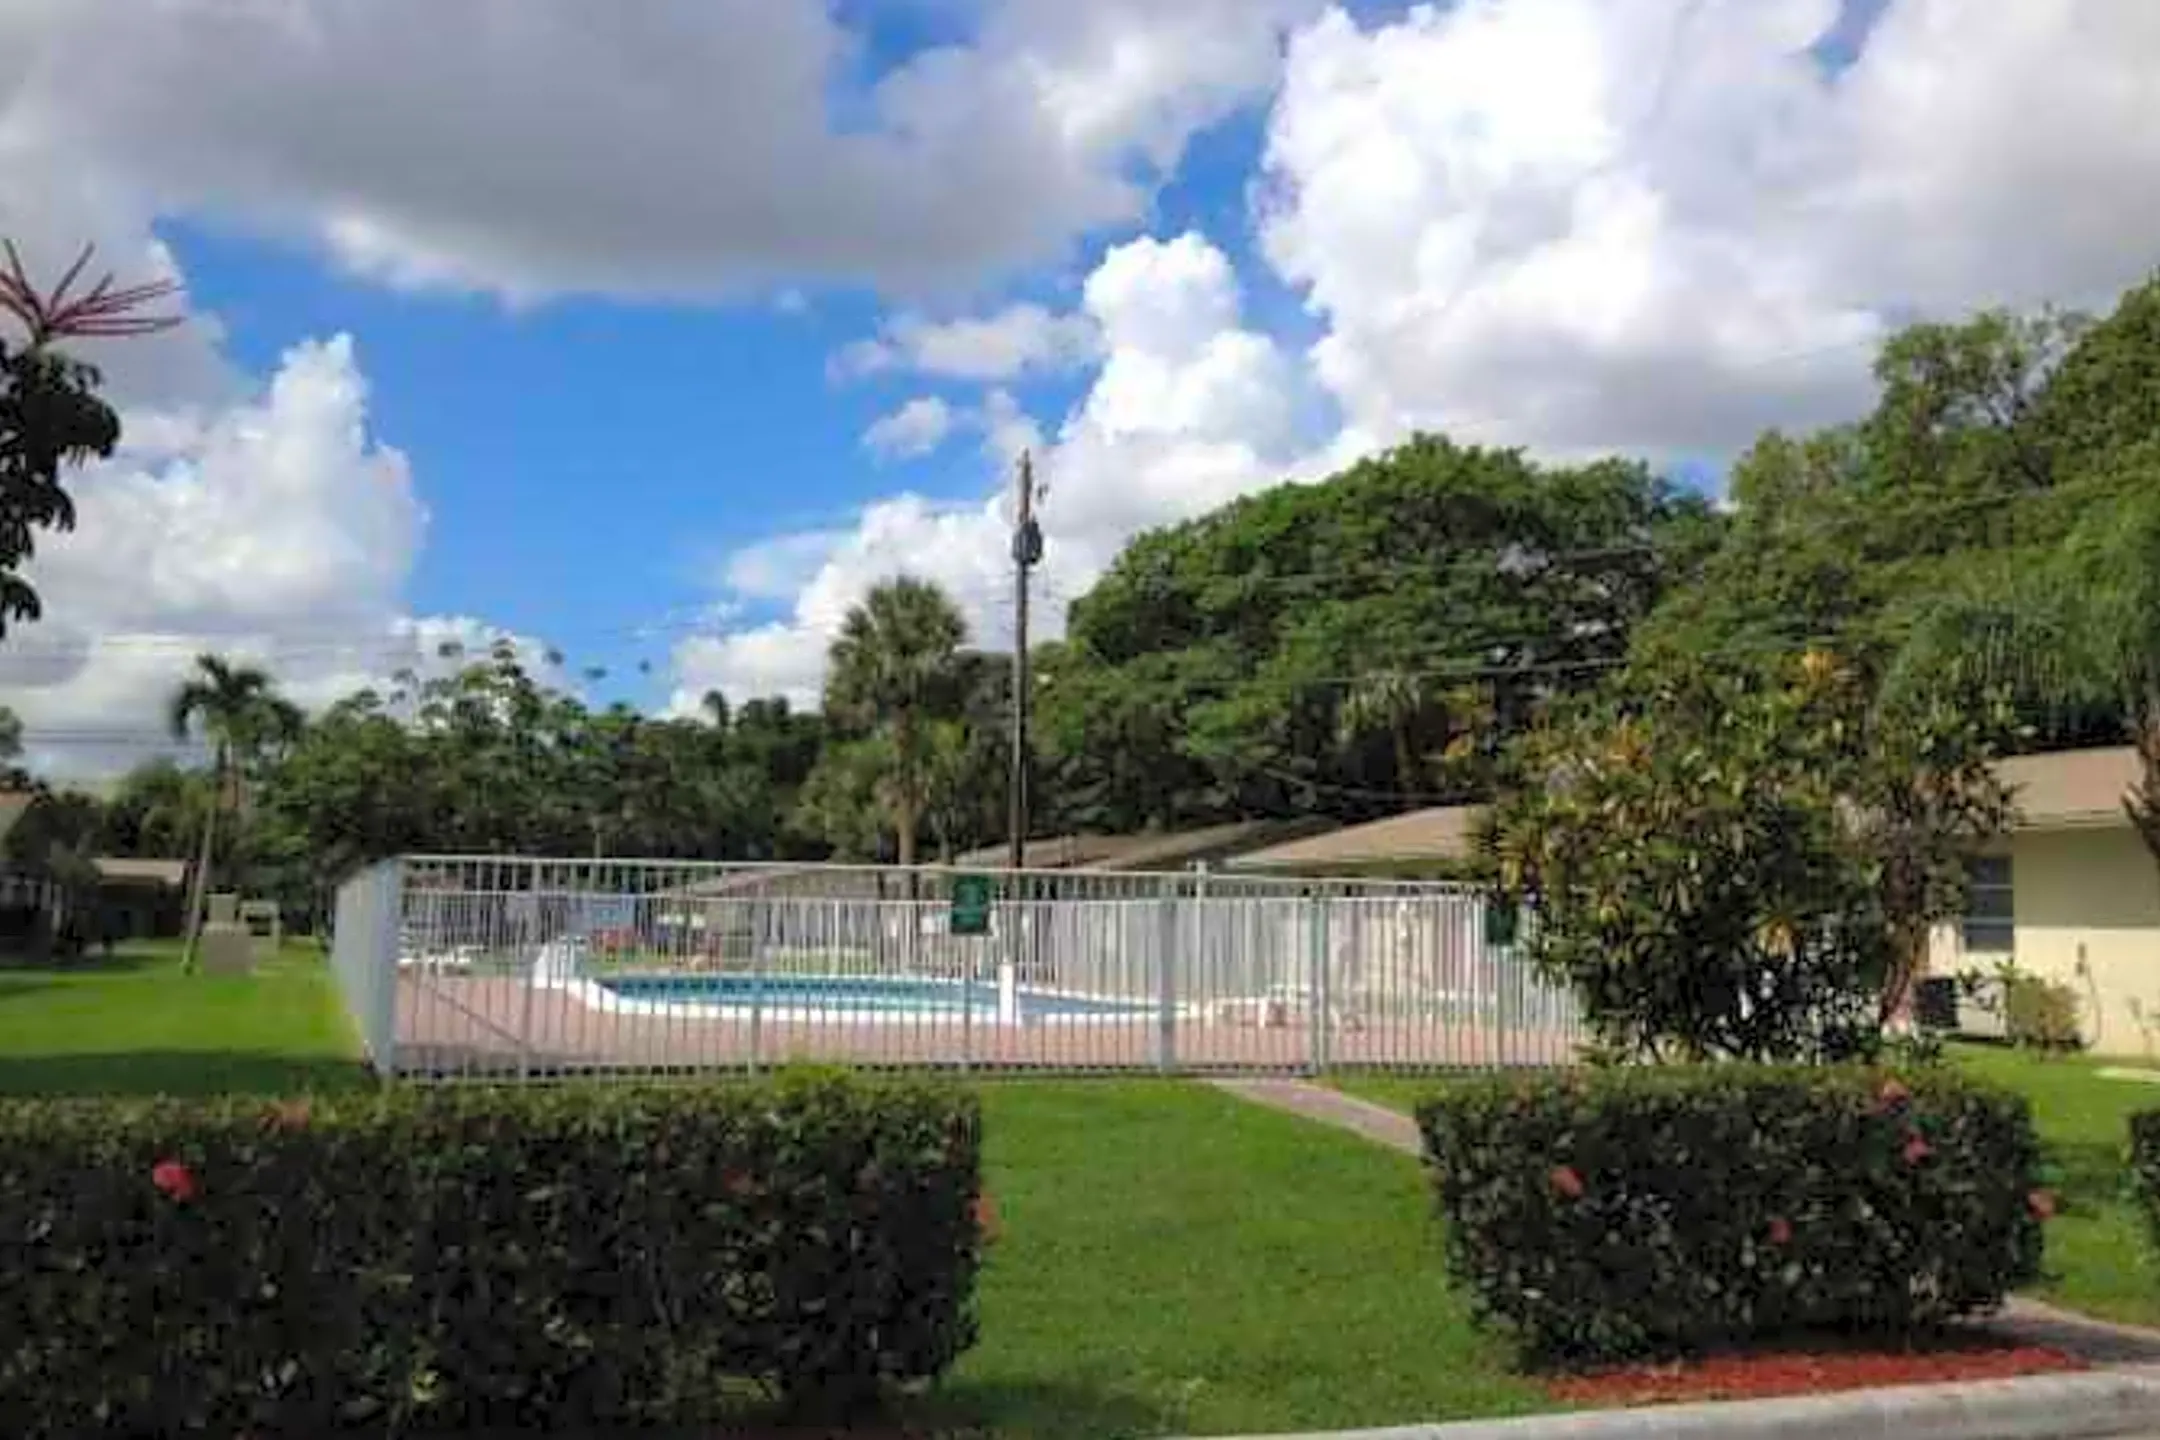 Landscaping - Community Acres - Fort Lauderdale, FL